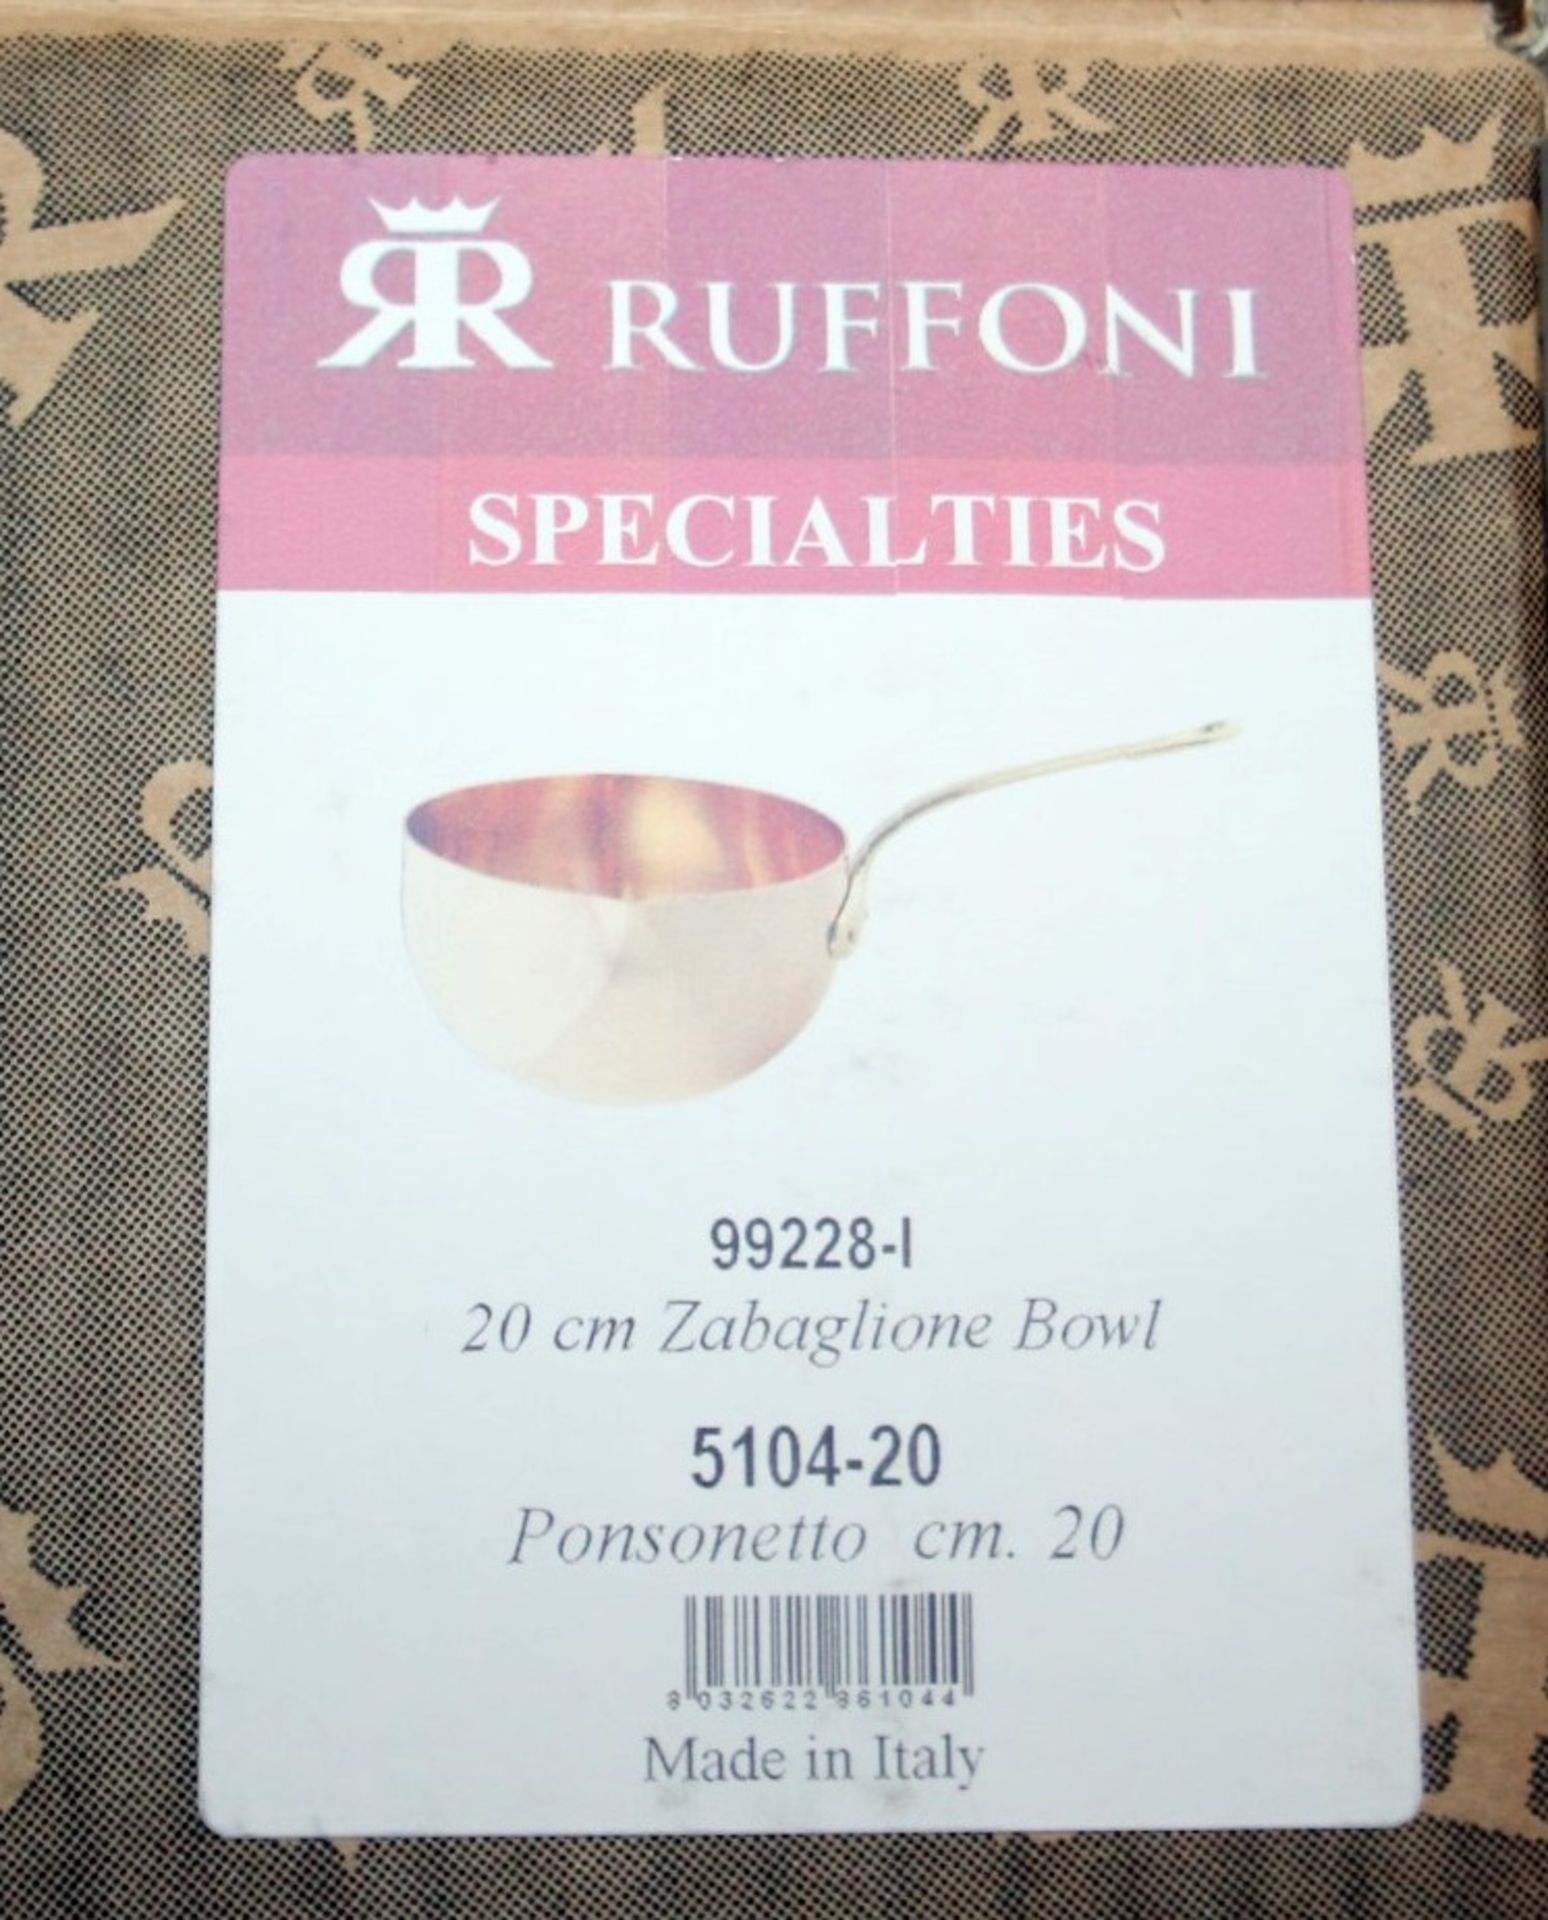 1 x RUFFONI Zabaglioni Pan (20cm) - Original Price £155.00 - Unused Boxed Stock - Image 3 of 6